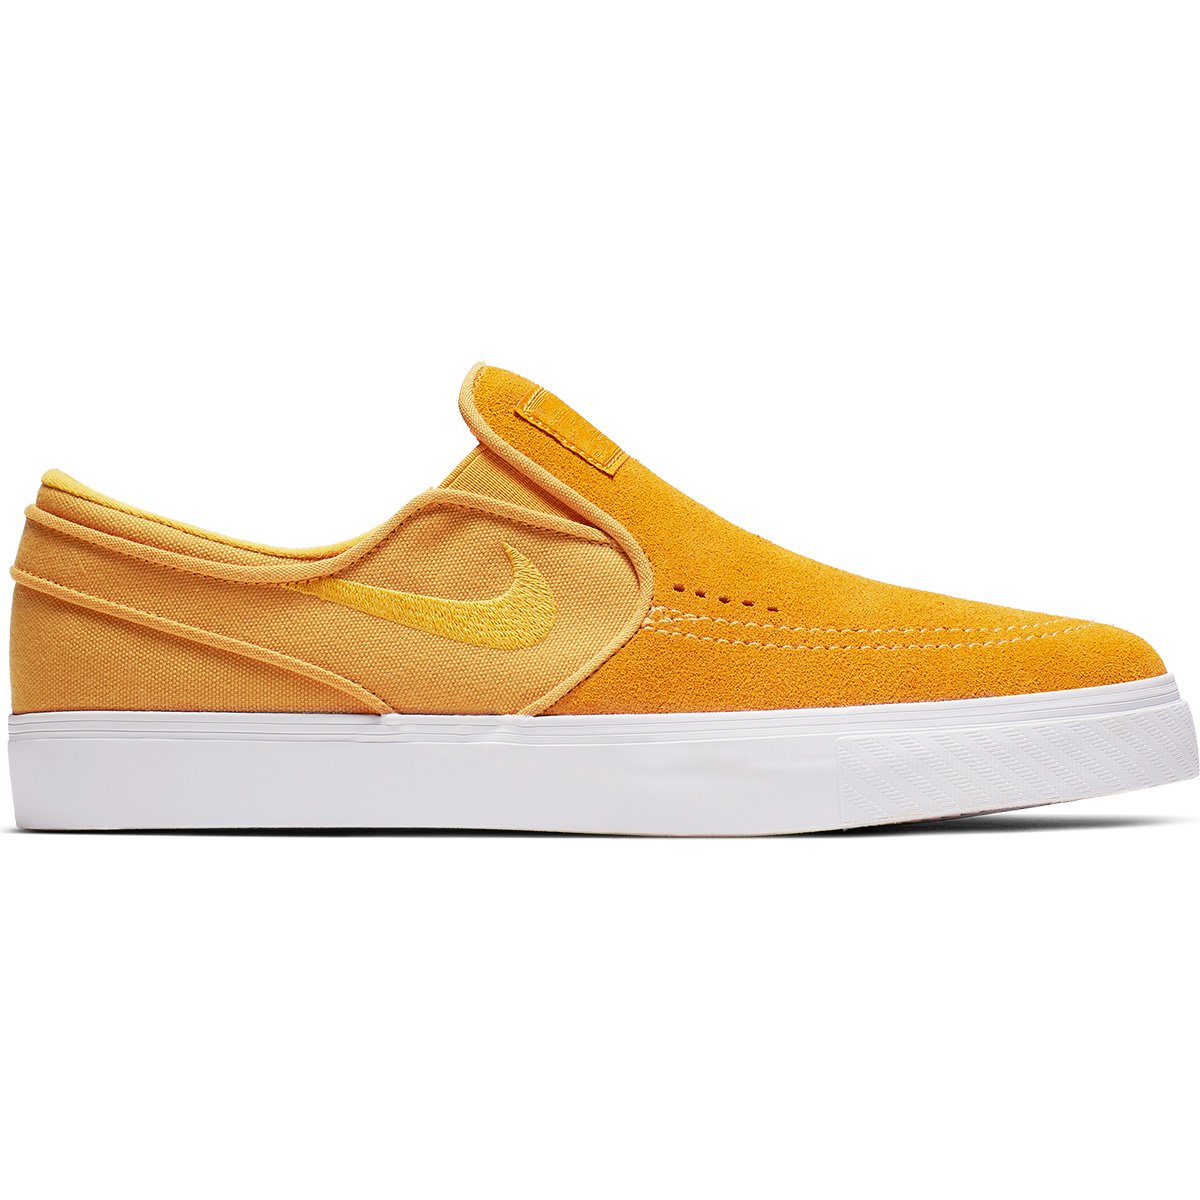 Nike Yellow Ochre Suede SB Janoski Zoom Slip On Shoes